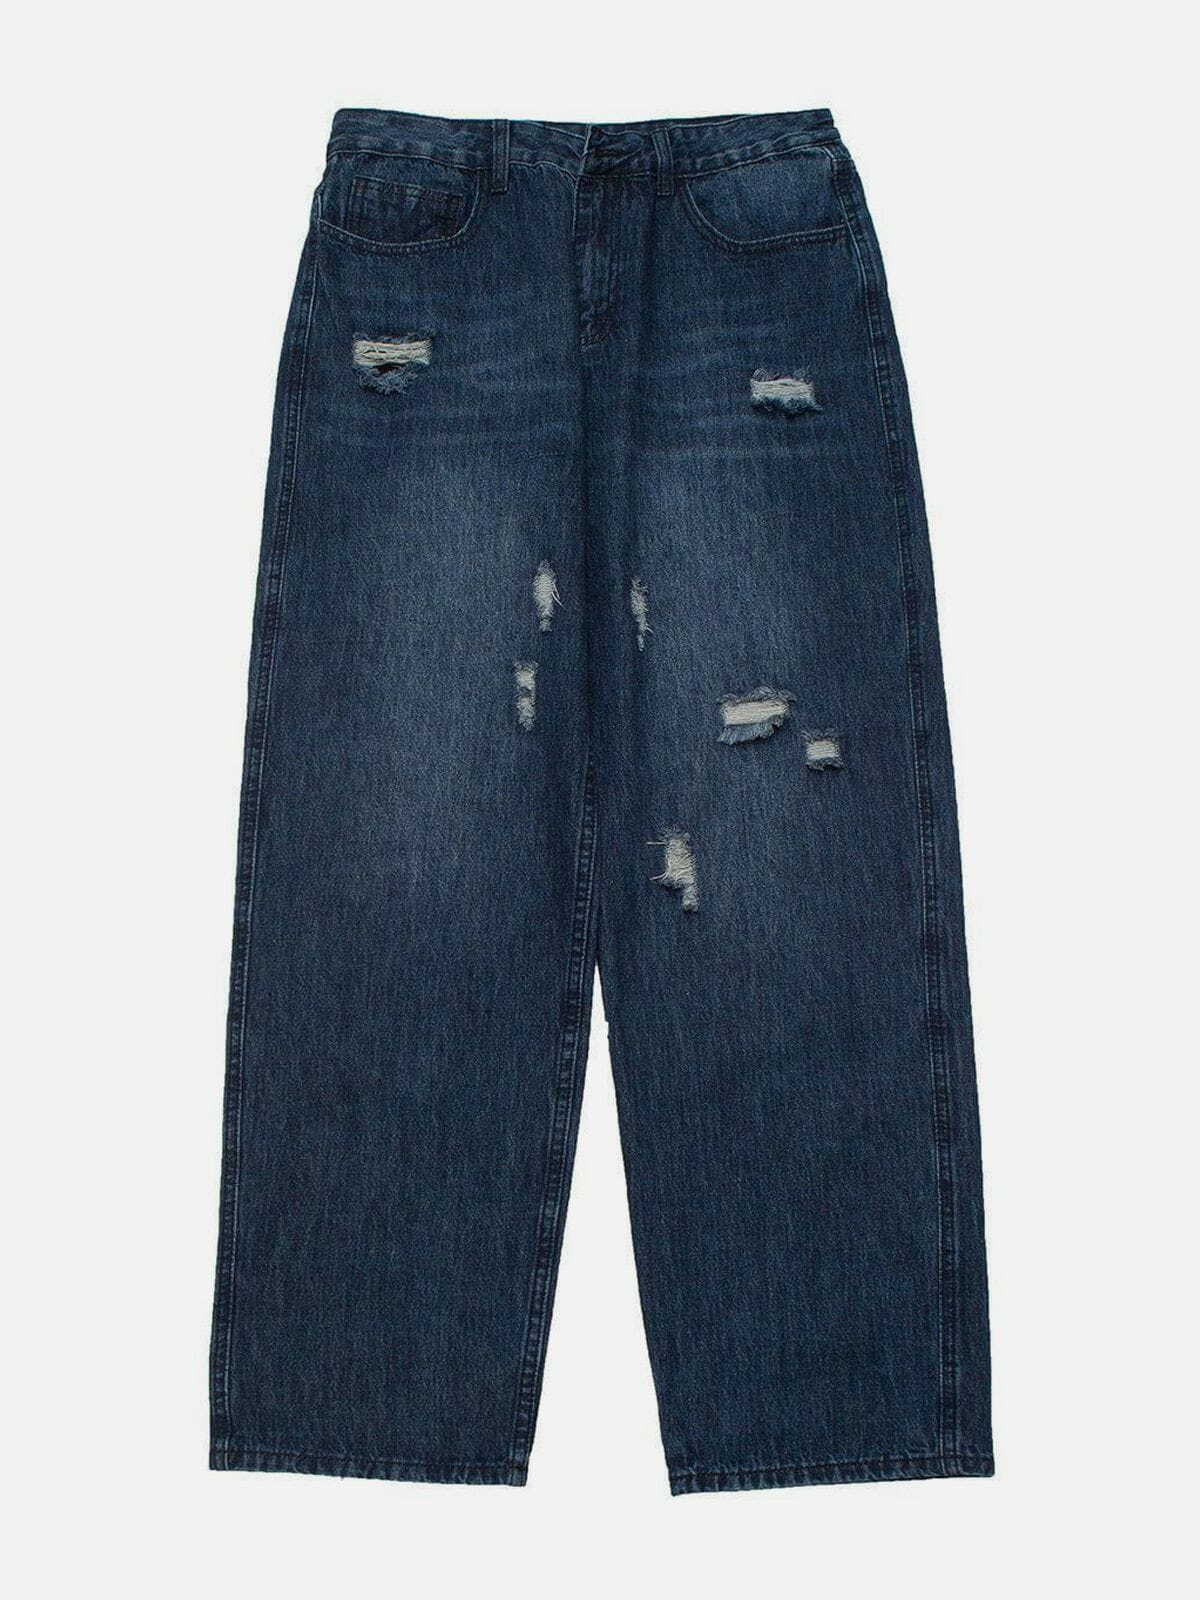 vintage denim patchwork jeans edgy streetwear essential 3192